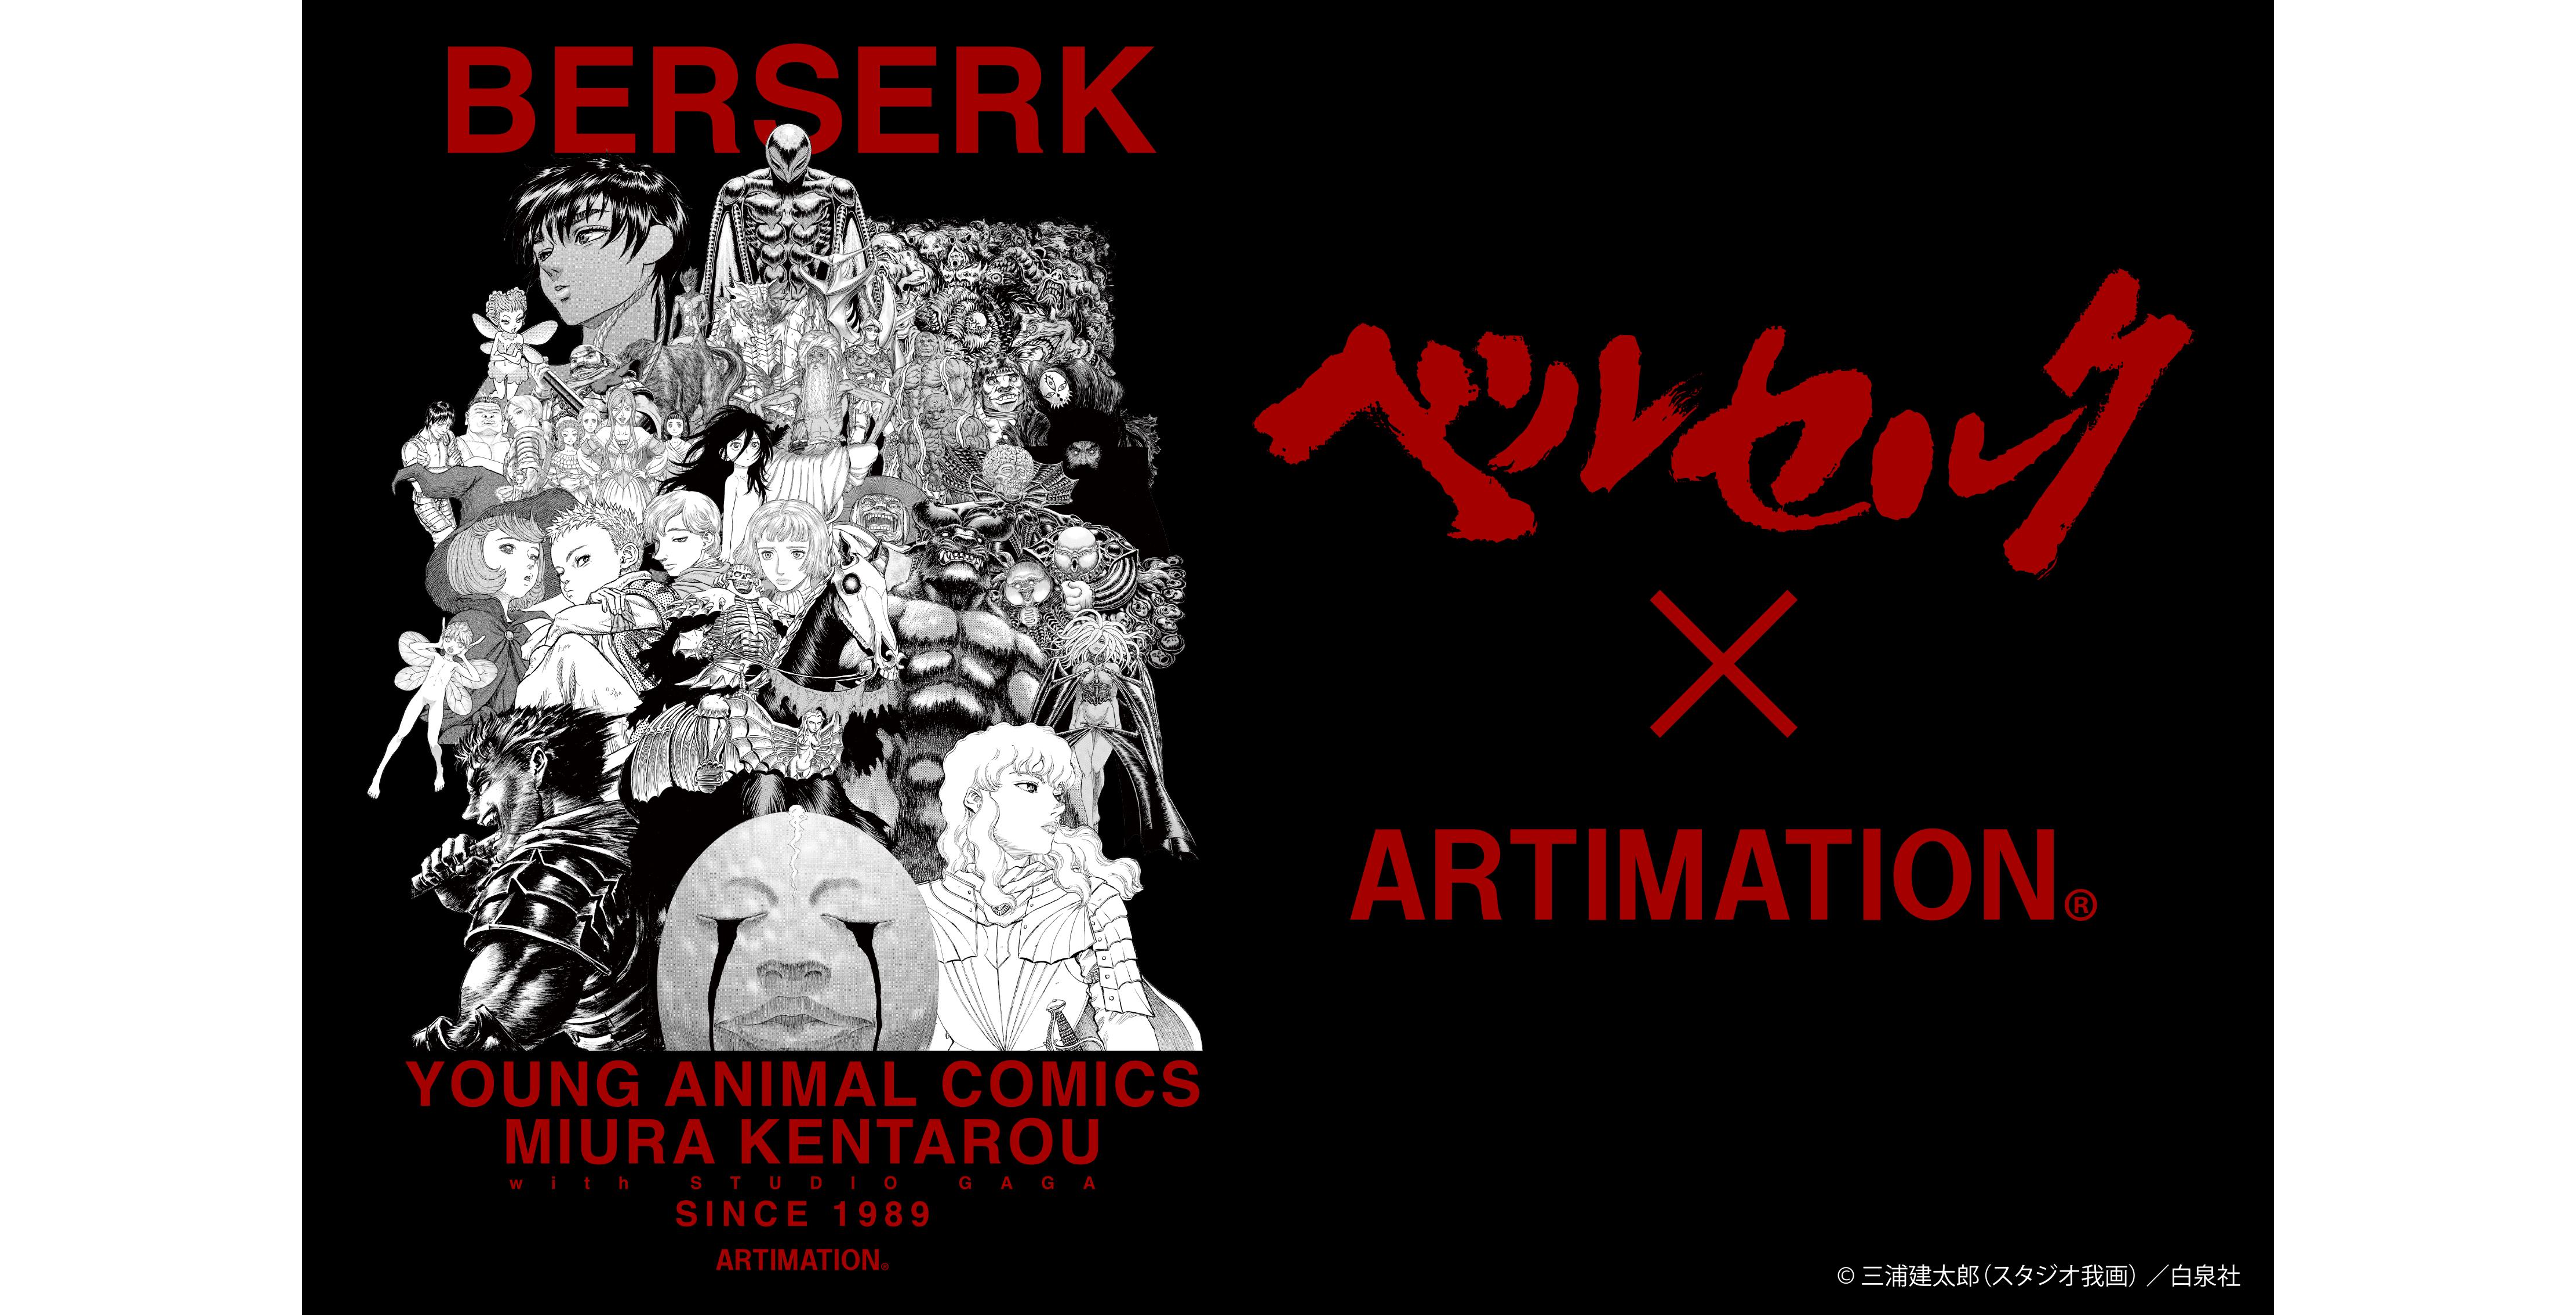 Japanese Berserk Vol. 1 (Young Animal Comics) Miura Kentarou manga from  Japan